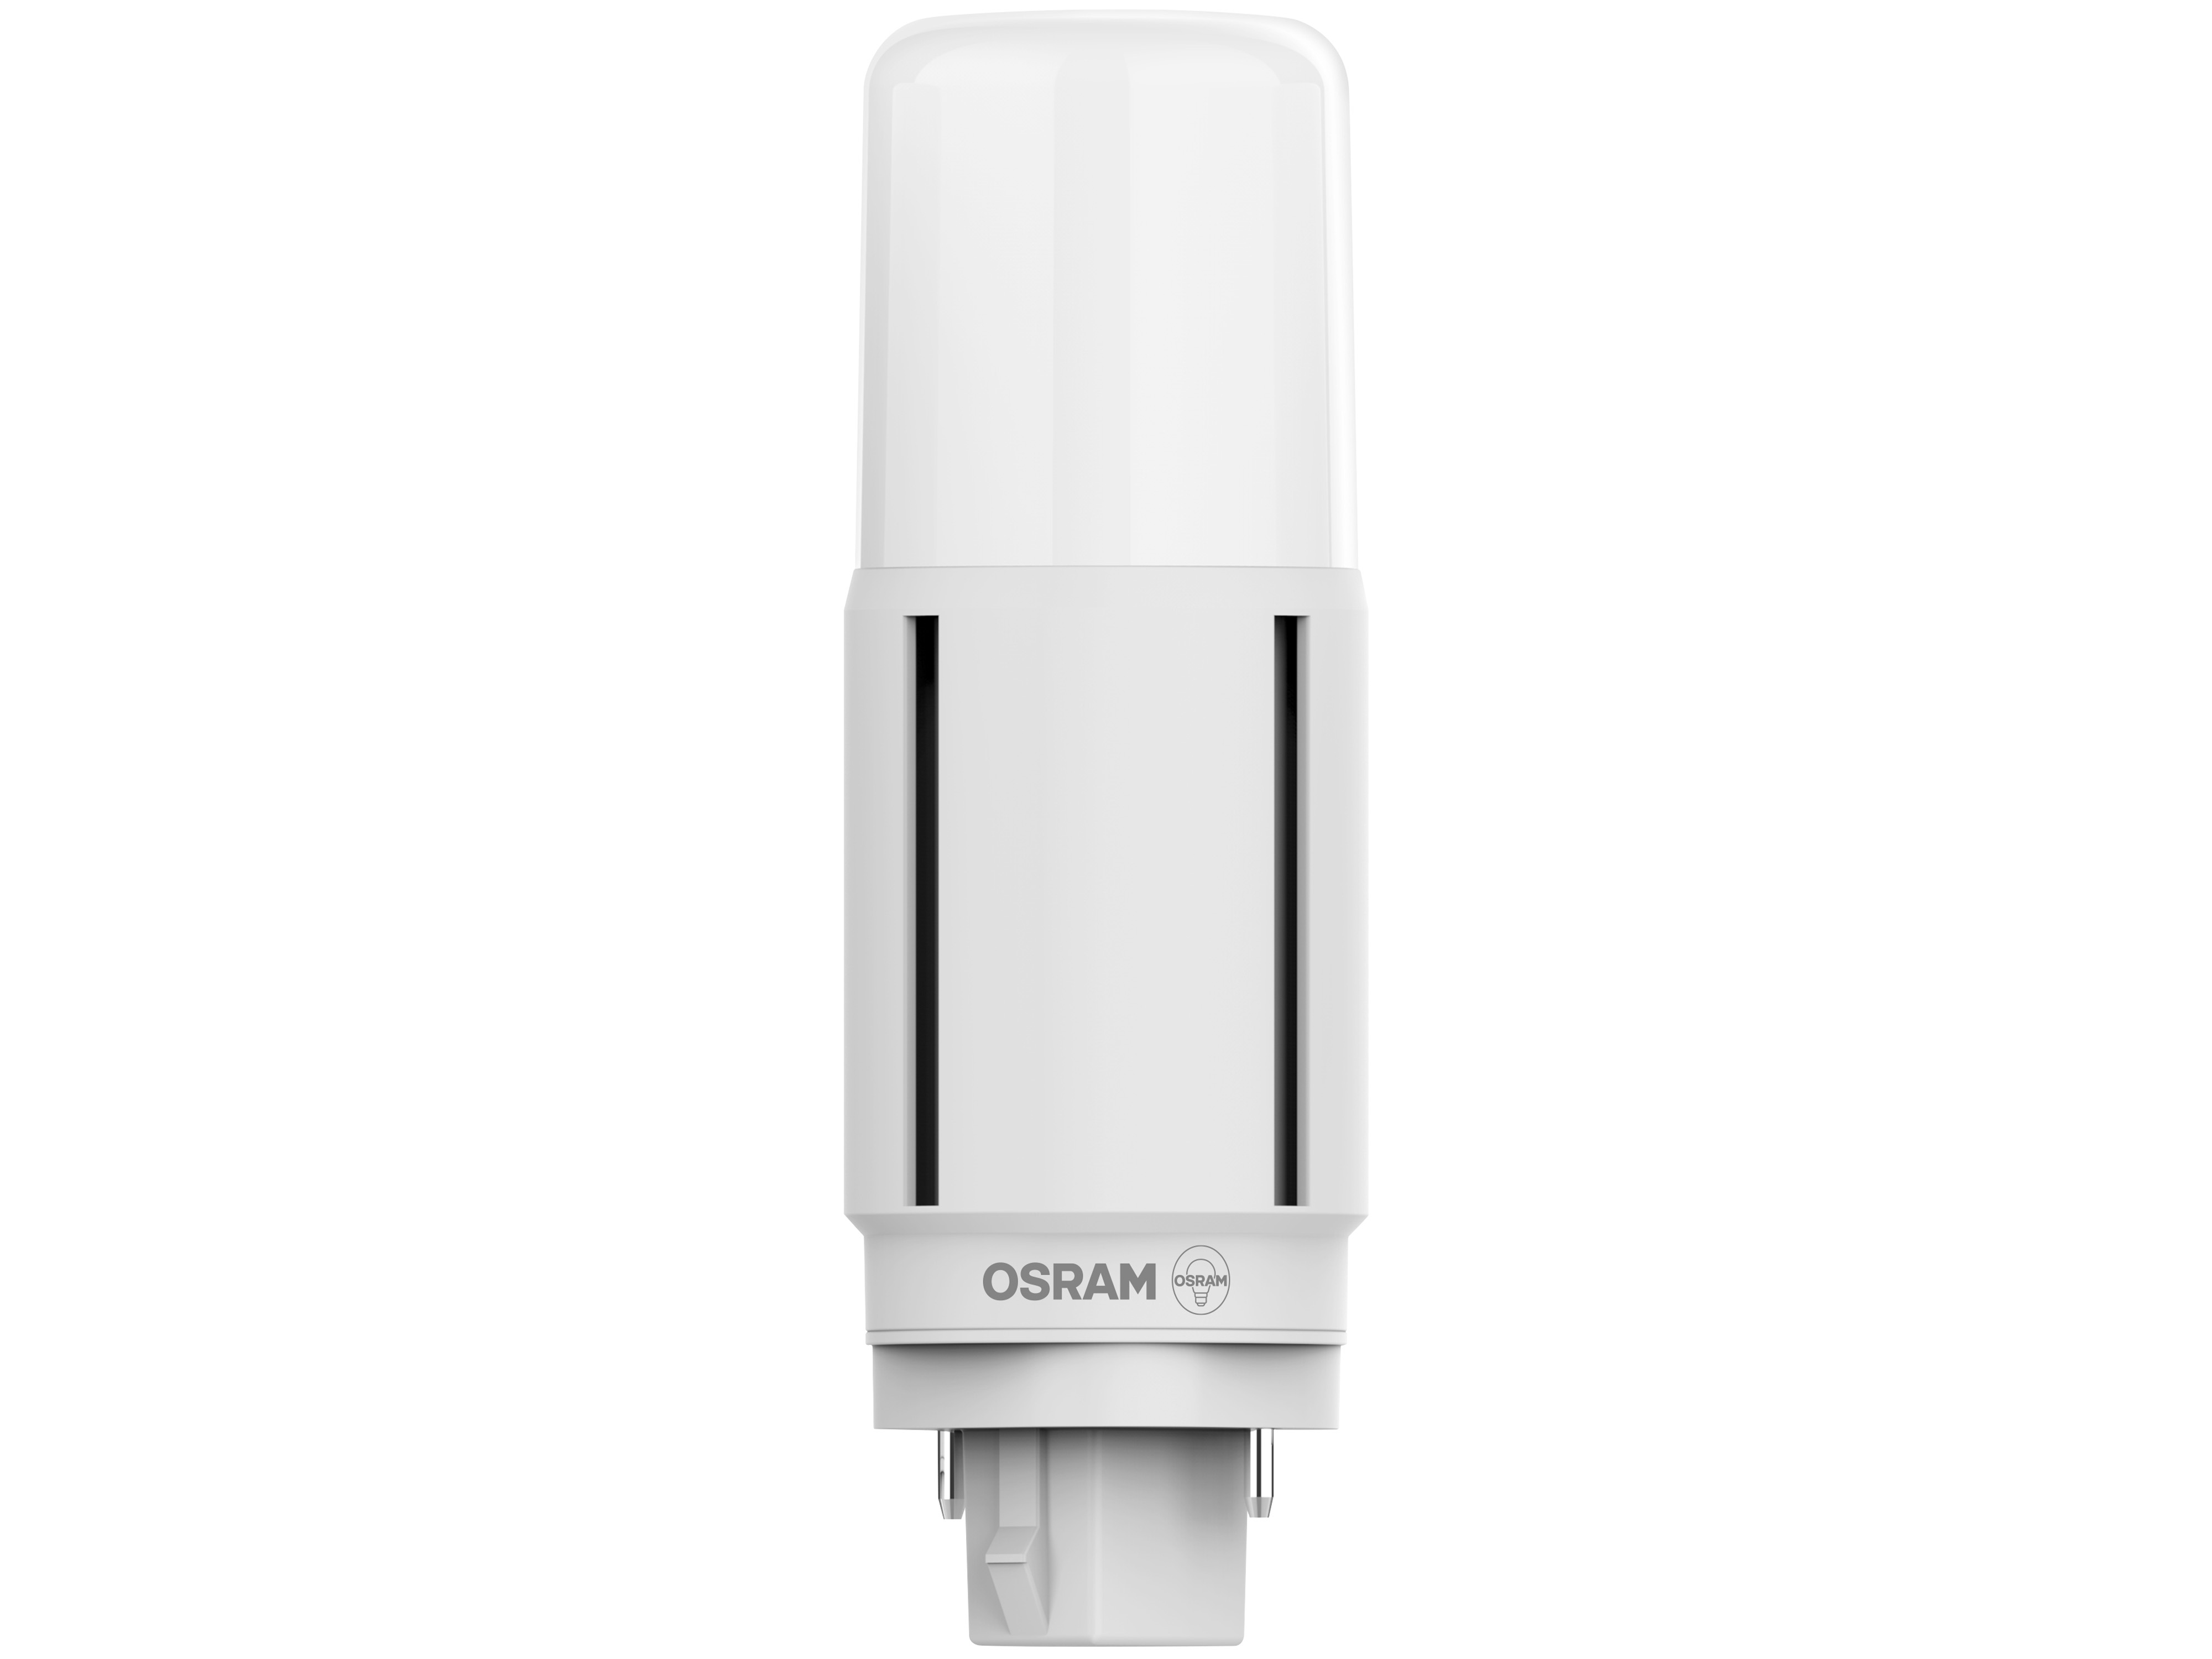 OSRAM LED-Lampe, Dulux D13, G24d, EEK: E, 5,5W, 640lm, 3000K